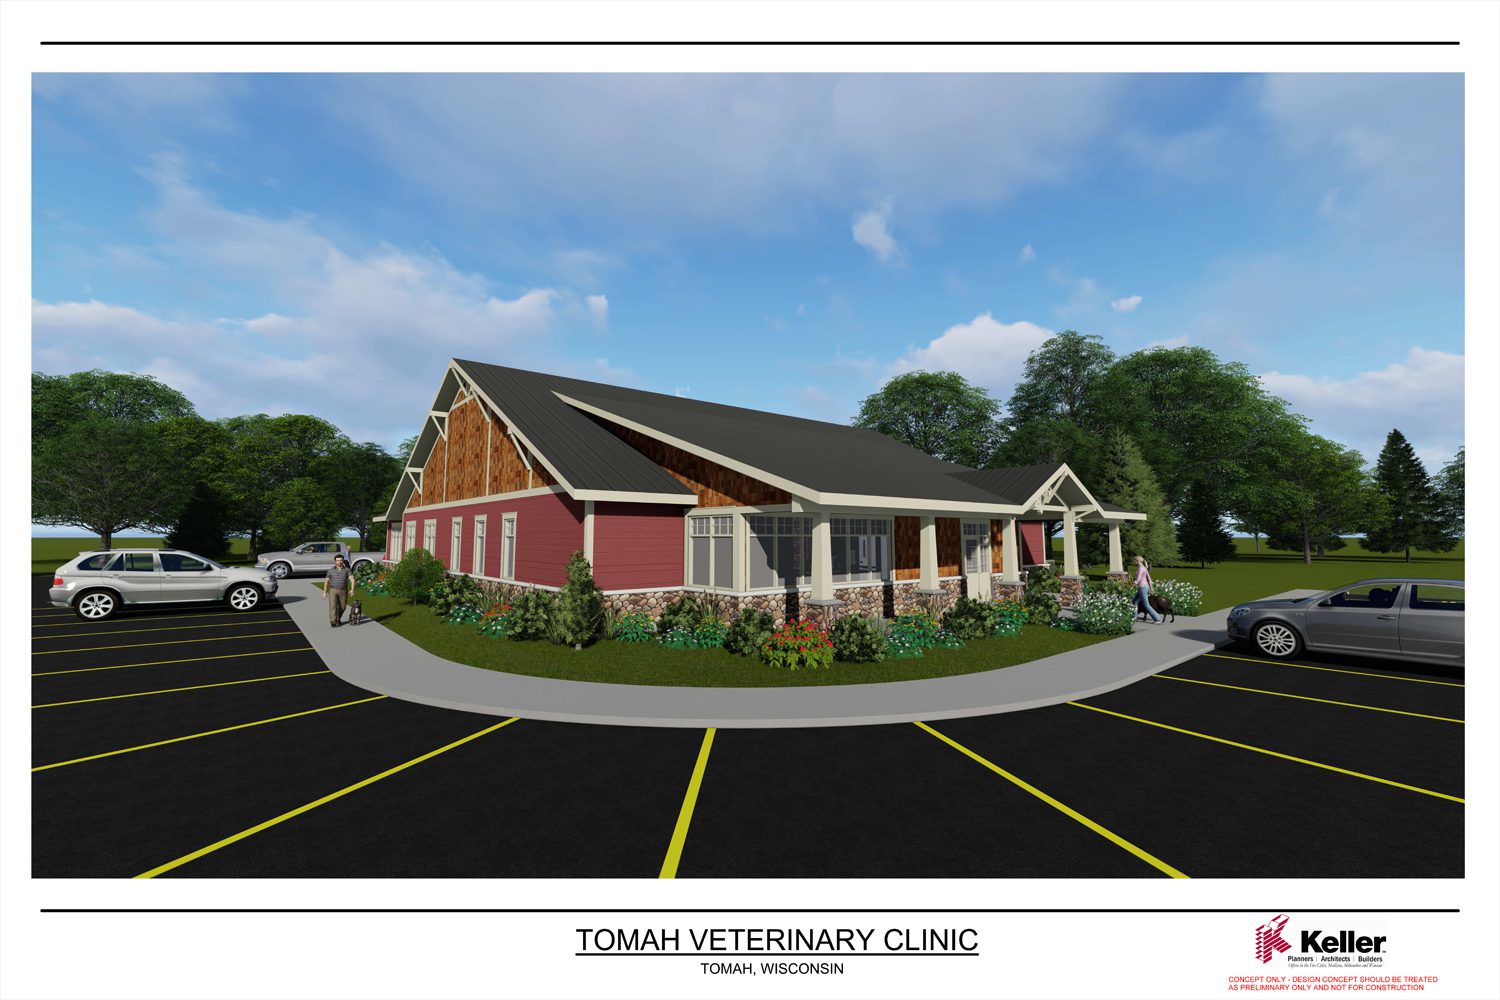 TomahVetClinic - Keller, Inc. to Build for Tomah Veterinary Clinic